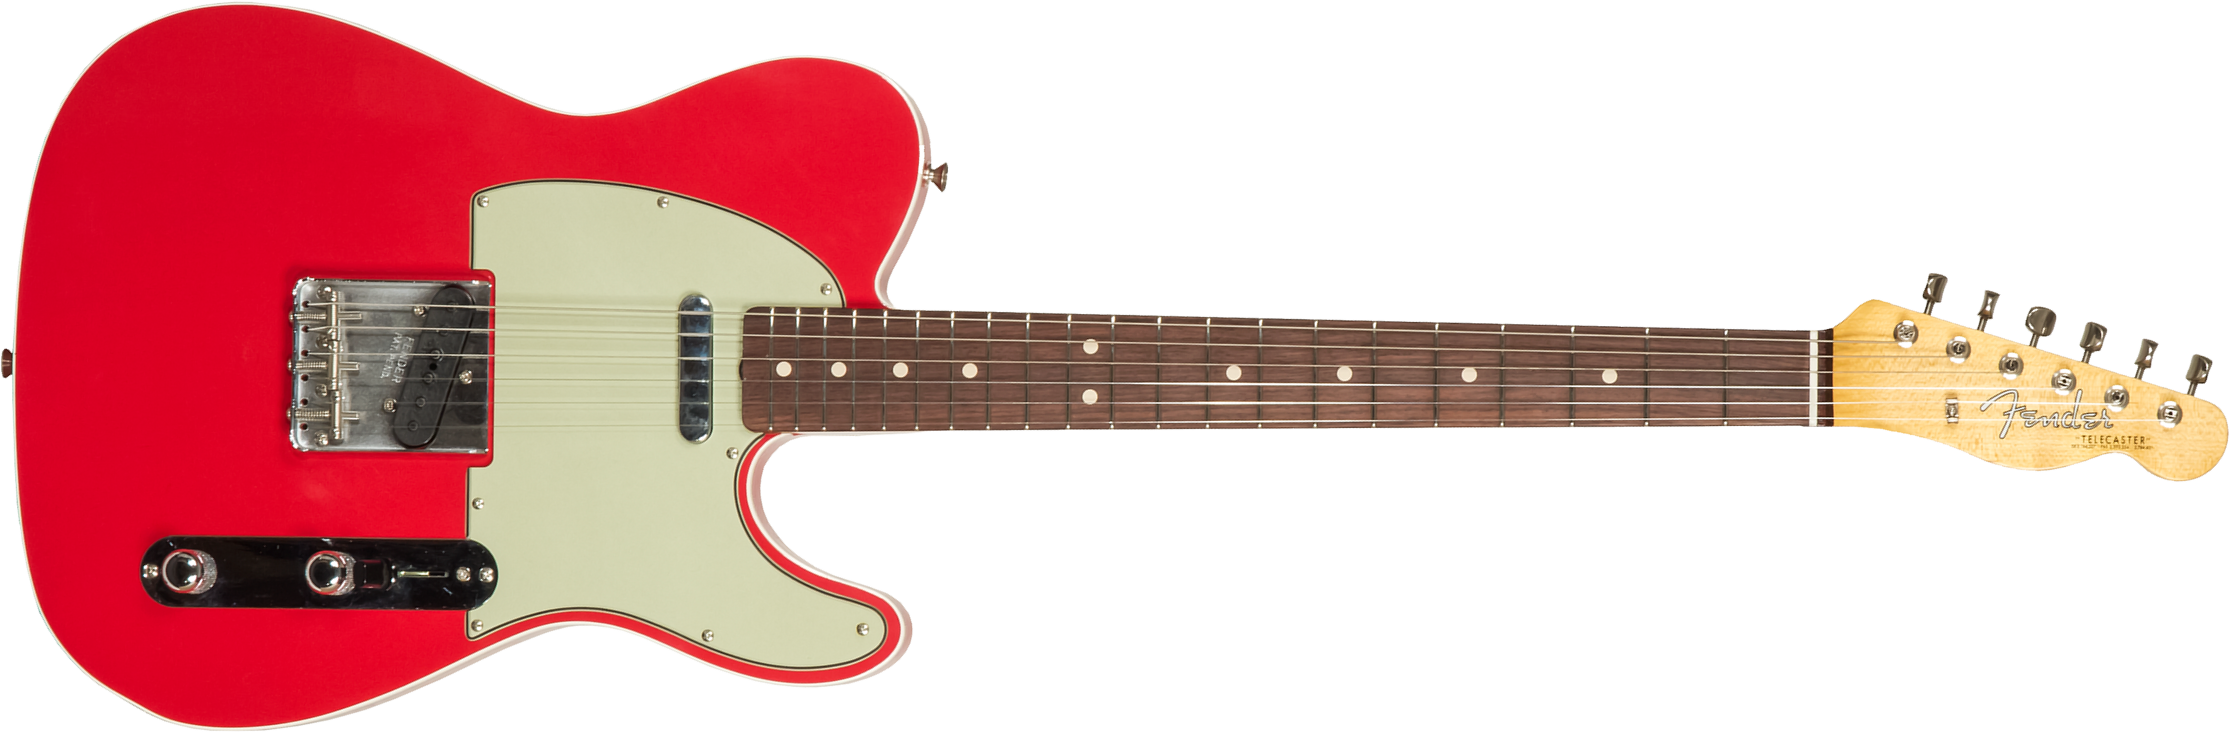 Fender Custom Shop Tele 1963 2s Ht Rw #r127693 - Closet Classic Fiesta Red - Televorm elektrische gitaar - Main picture